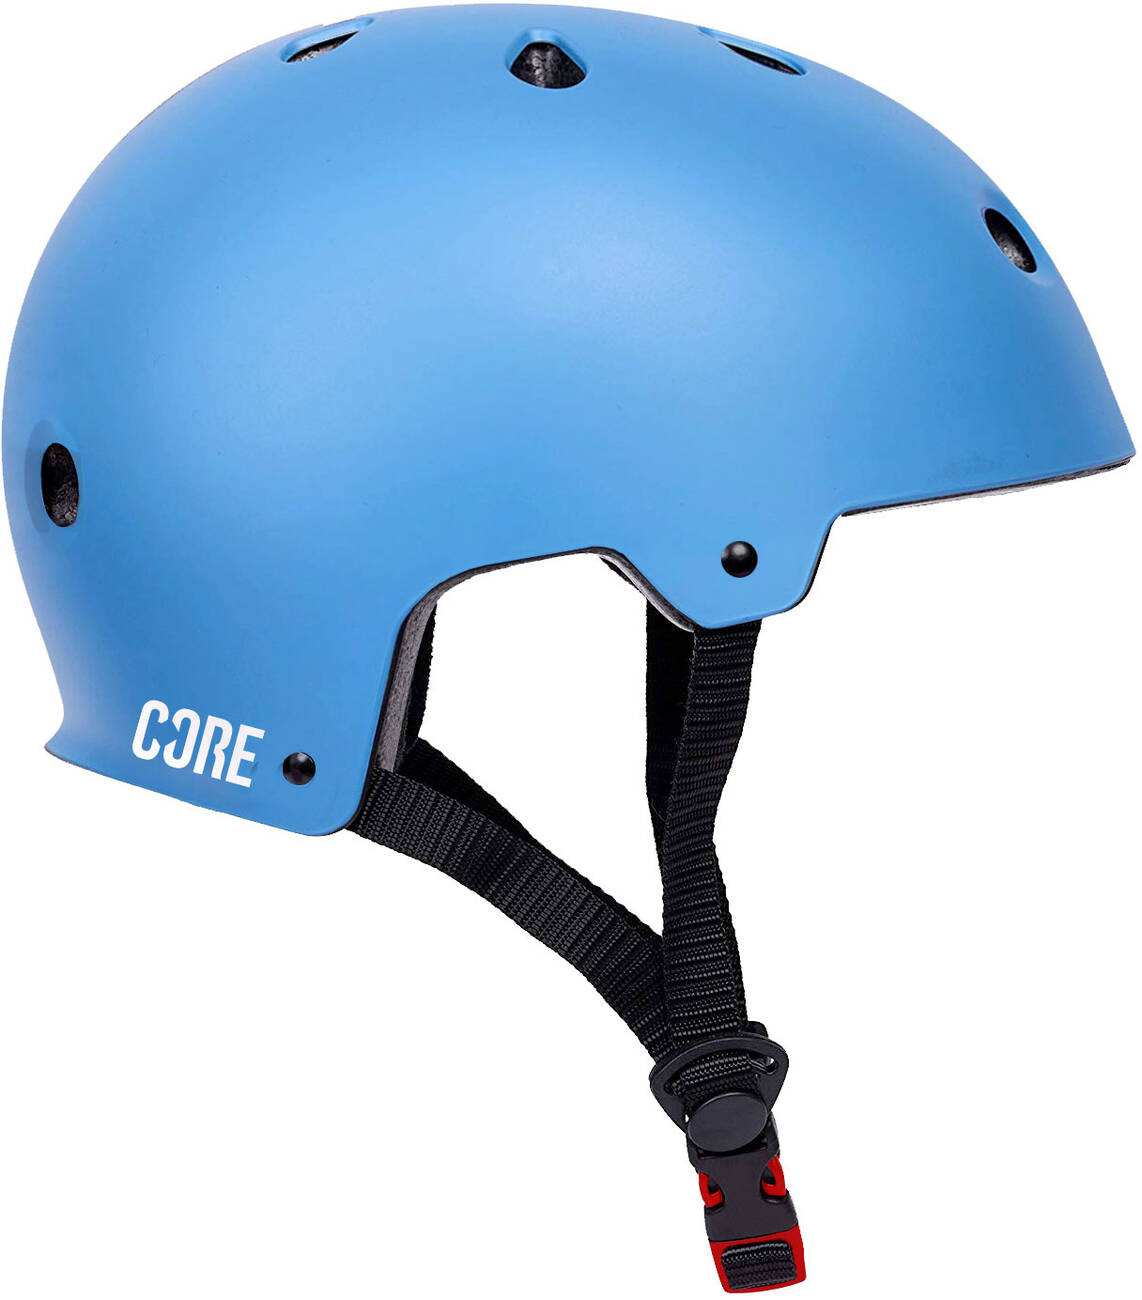 CORE Action Sports casco skate e casco bici blu XS-S